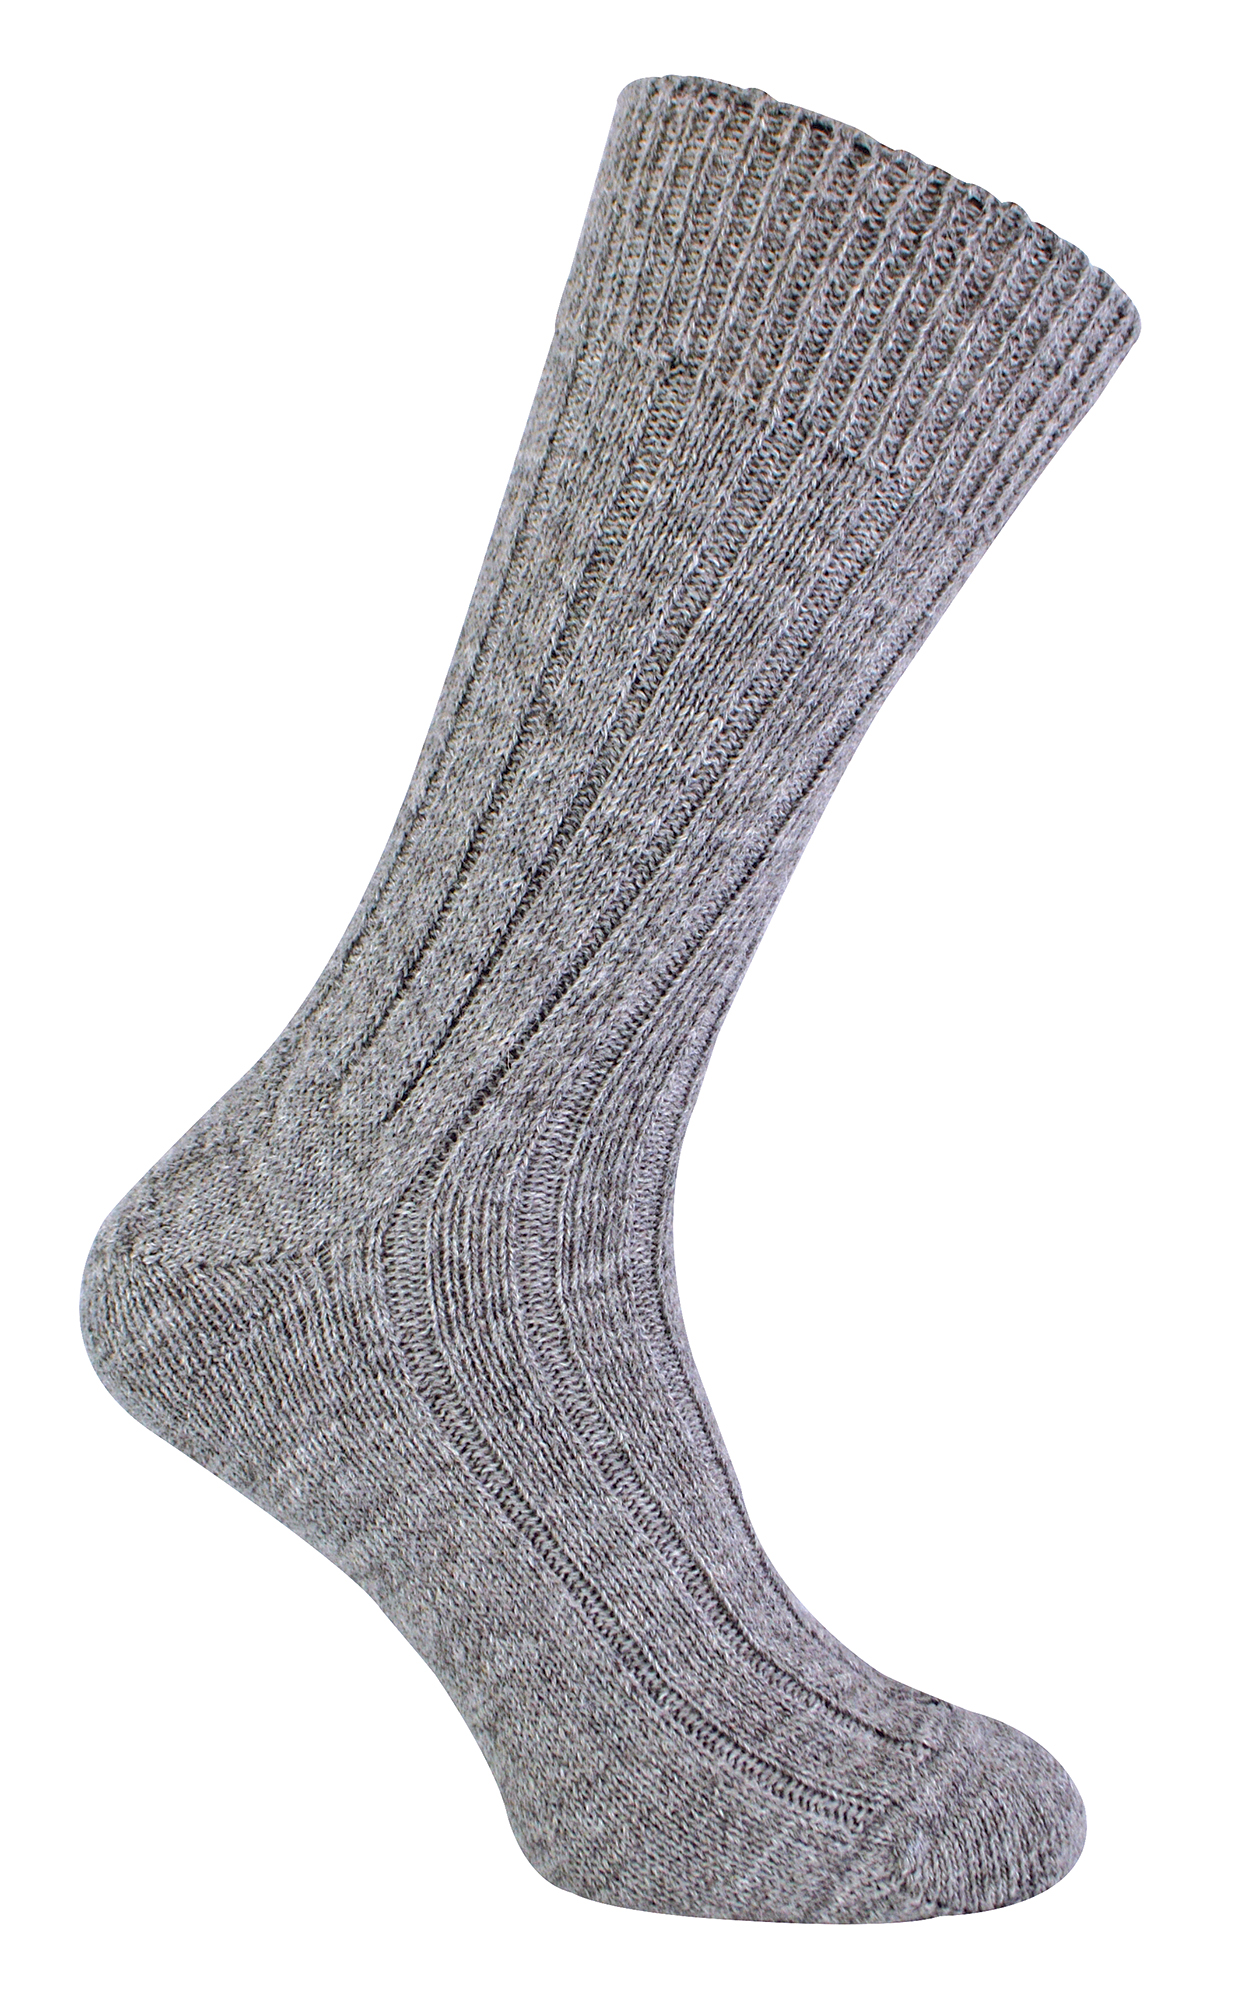 HSC Alpaca Bed Socks GRY 1 1